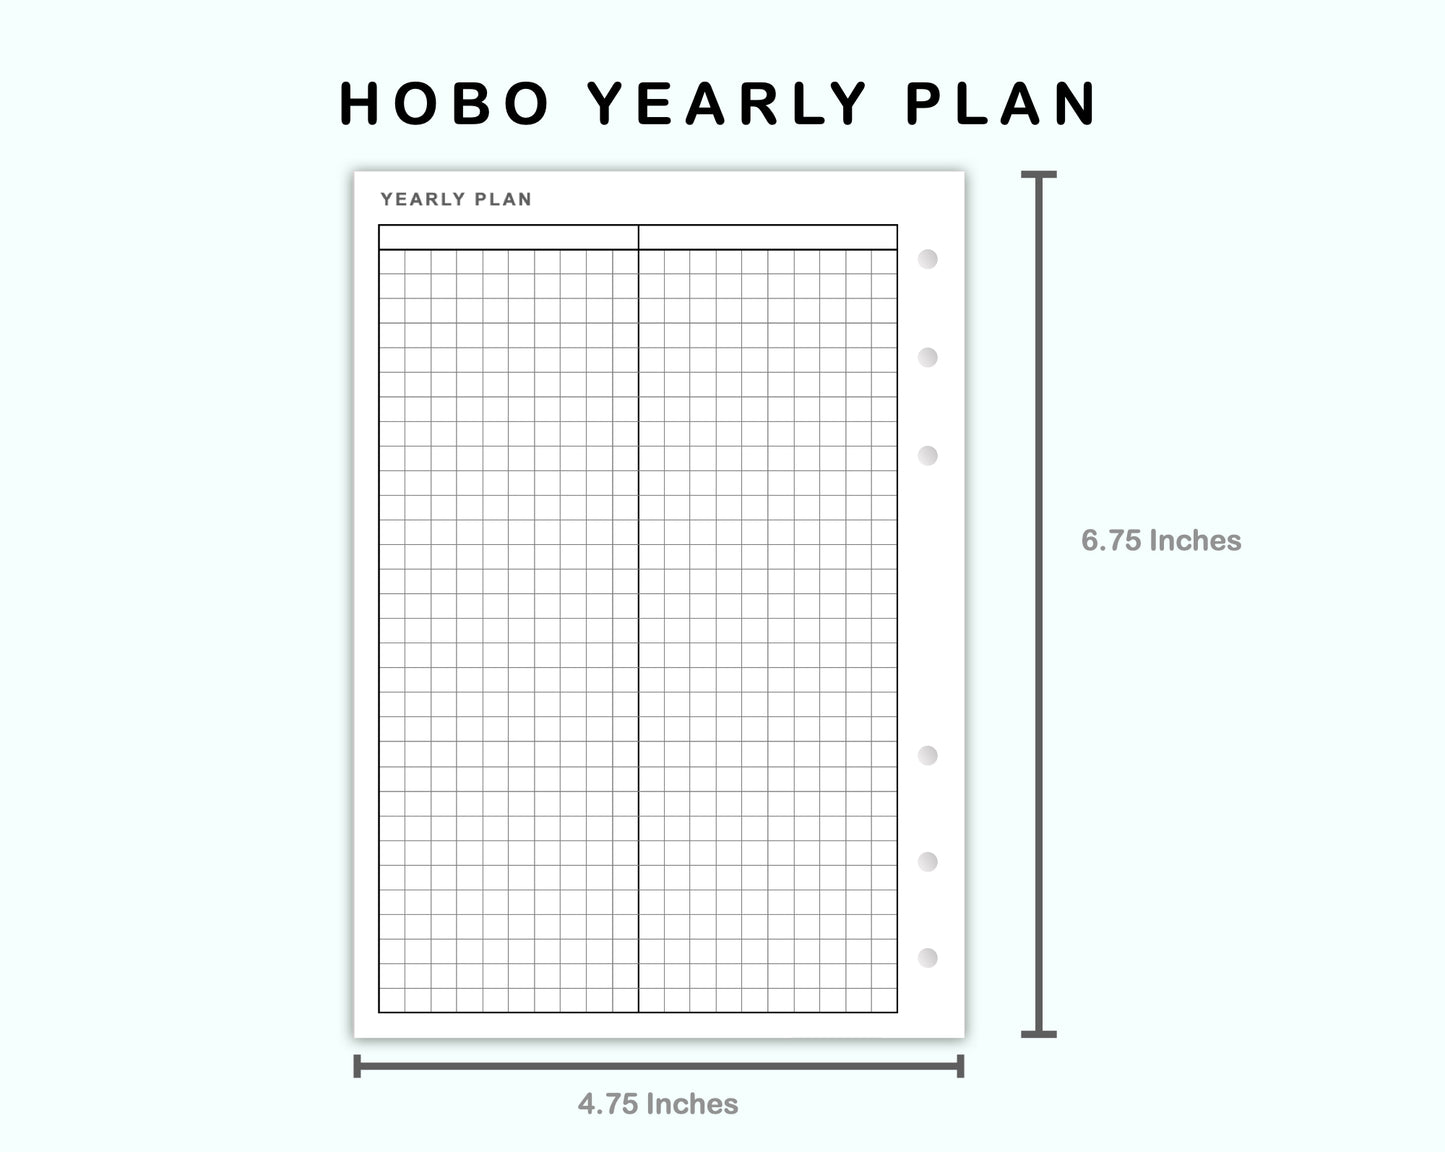 Personal Wide Inserts - Yearly Plan - Hobonichi